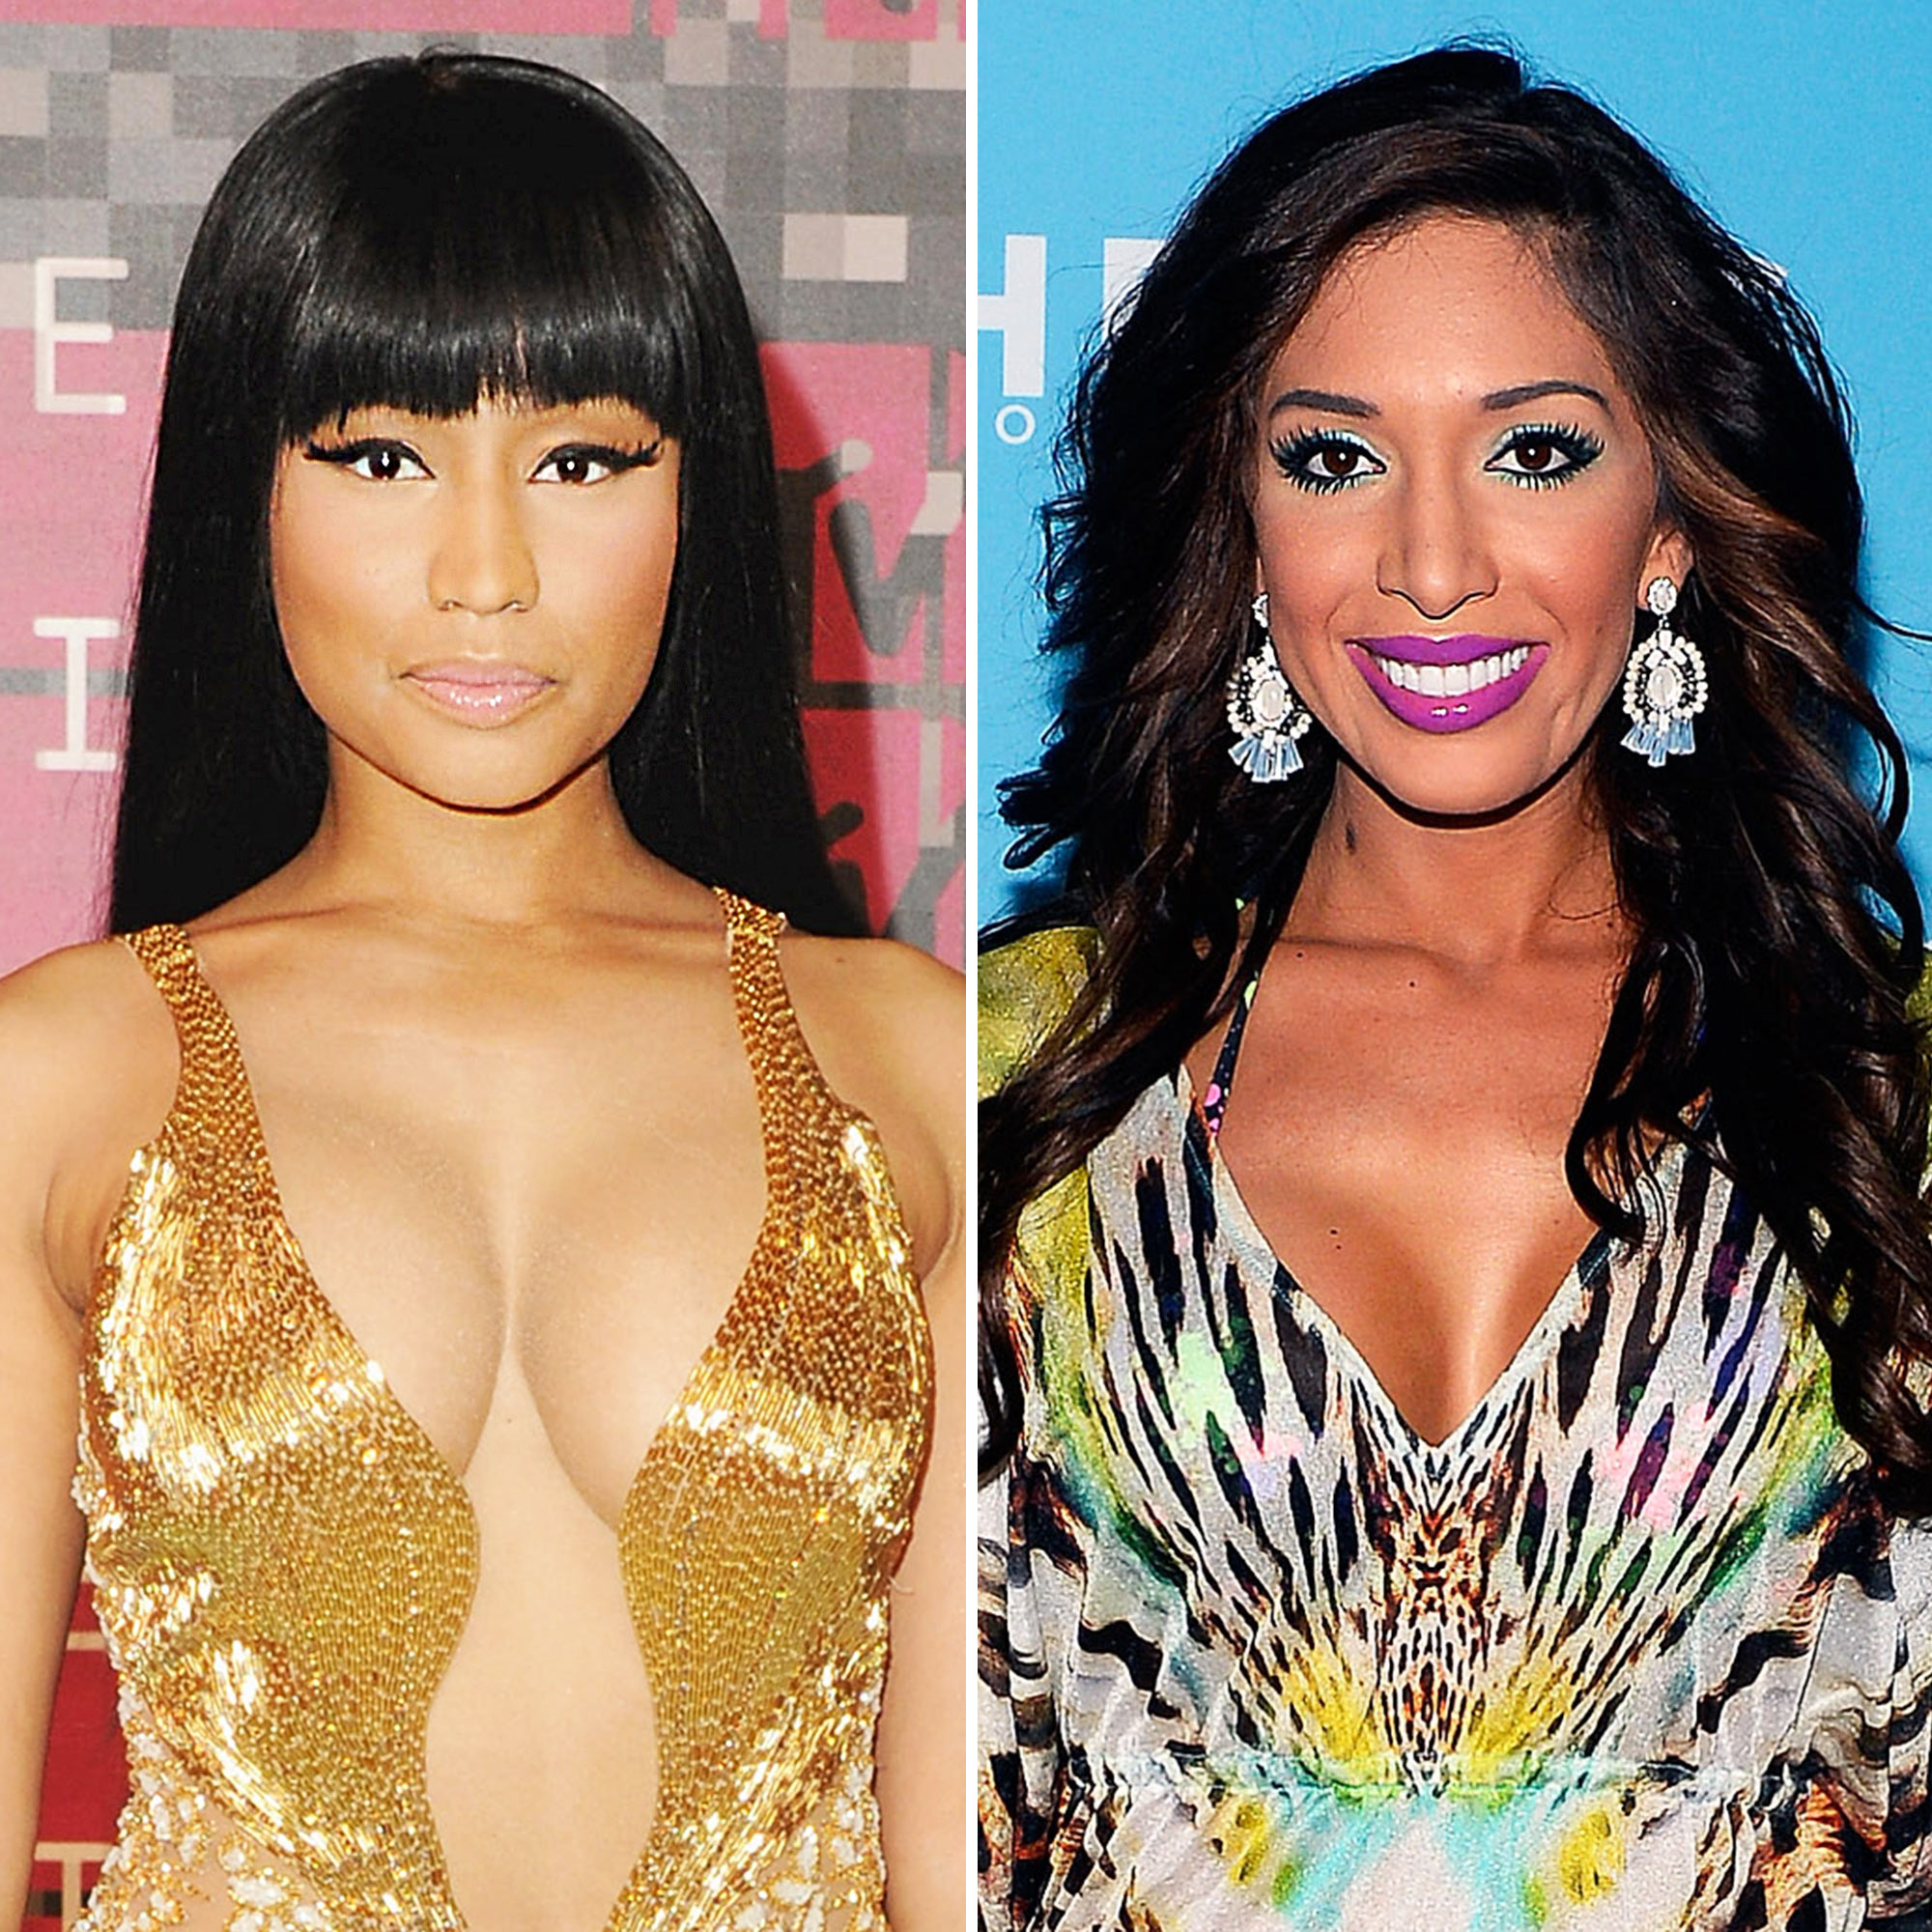 Nicky Minaj Porn Down Load - Farrah Abraham and Nicki Minaj Get Into a Heated Twitter Battle